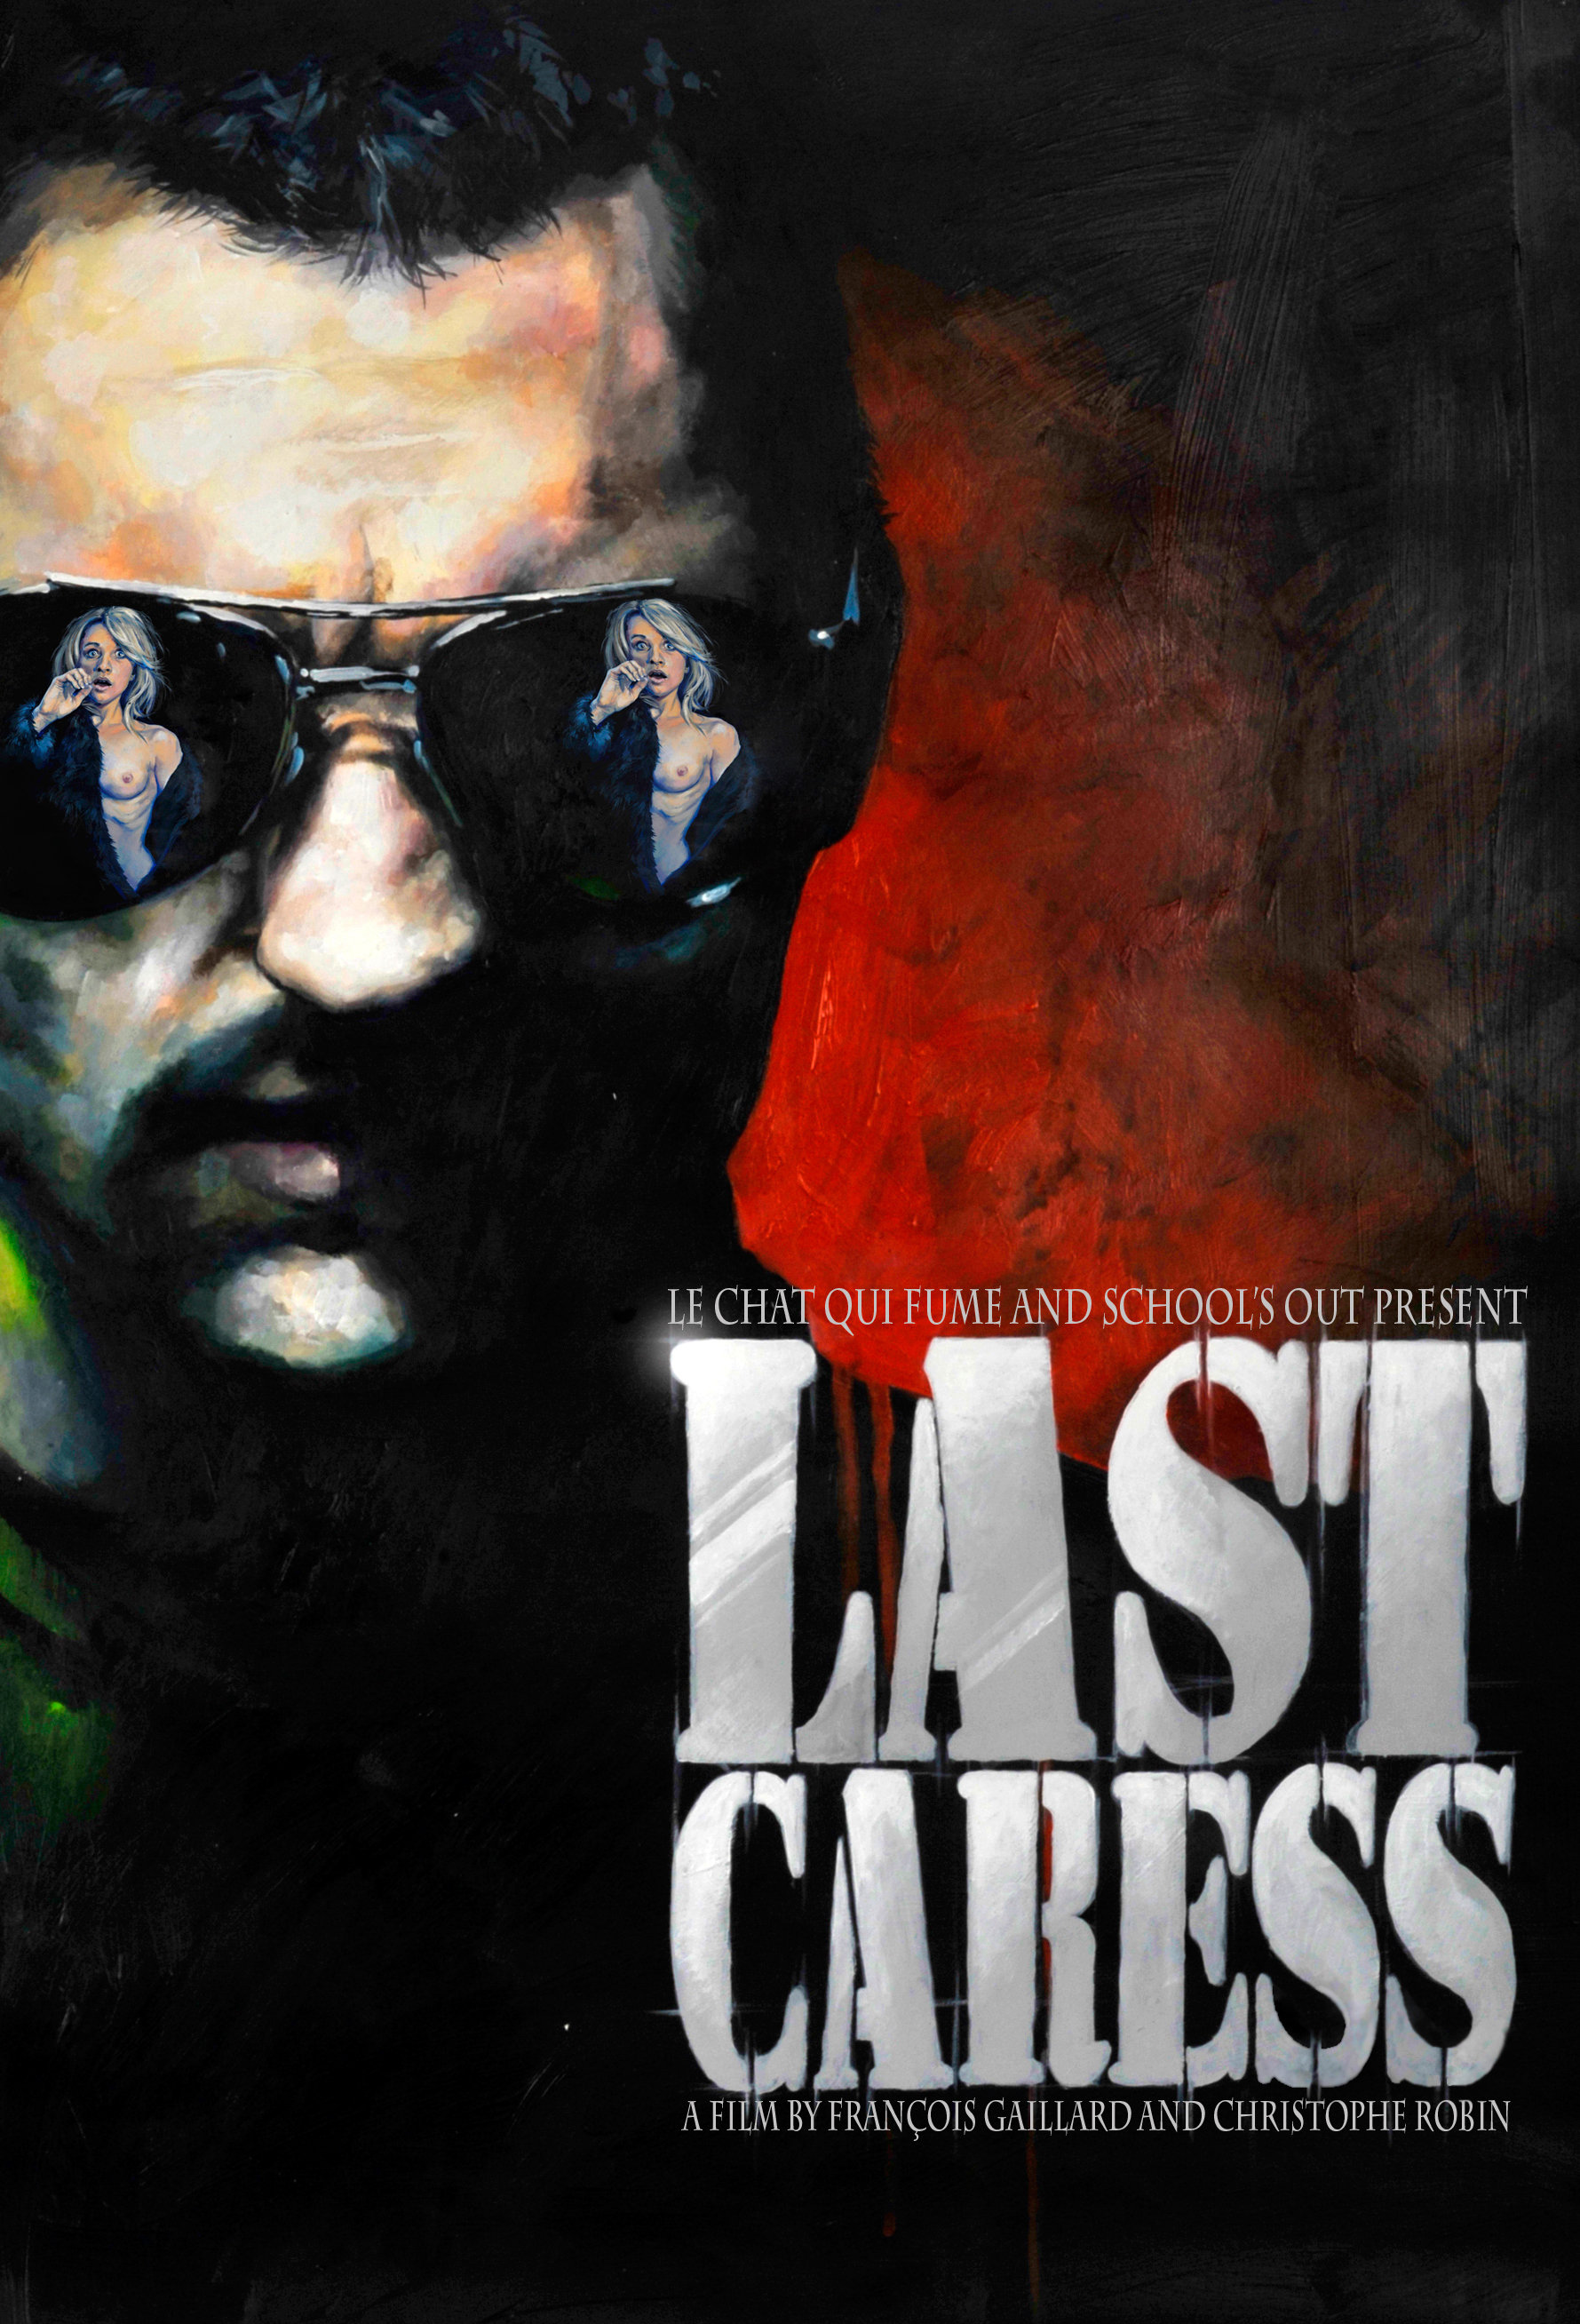 Last Caress (2010) Screenshot 1